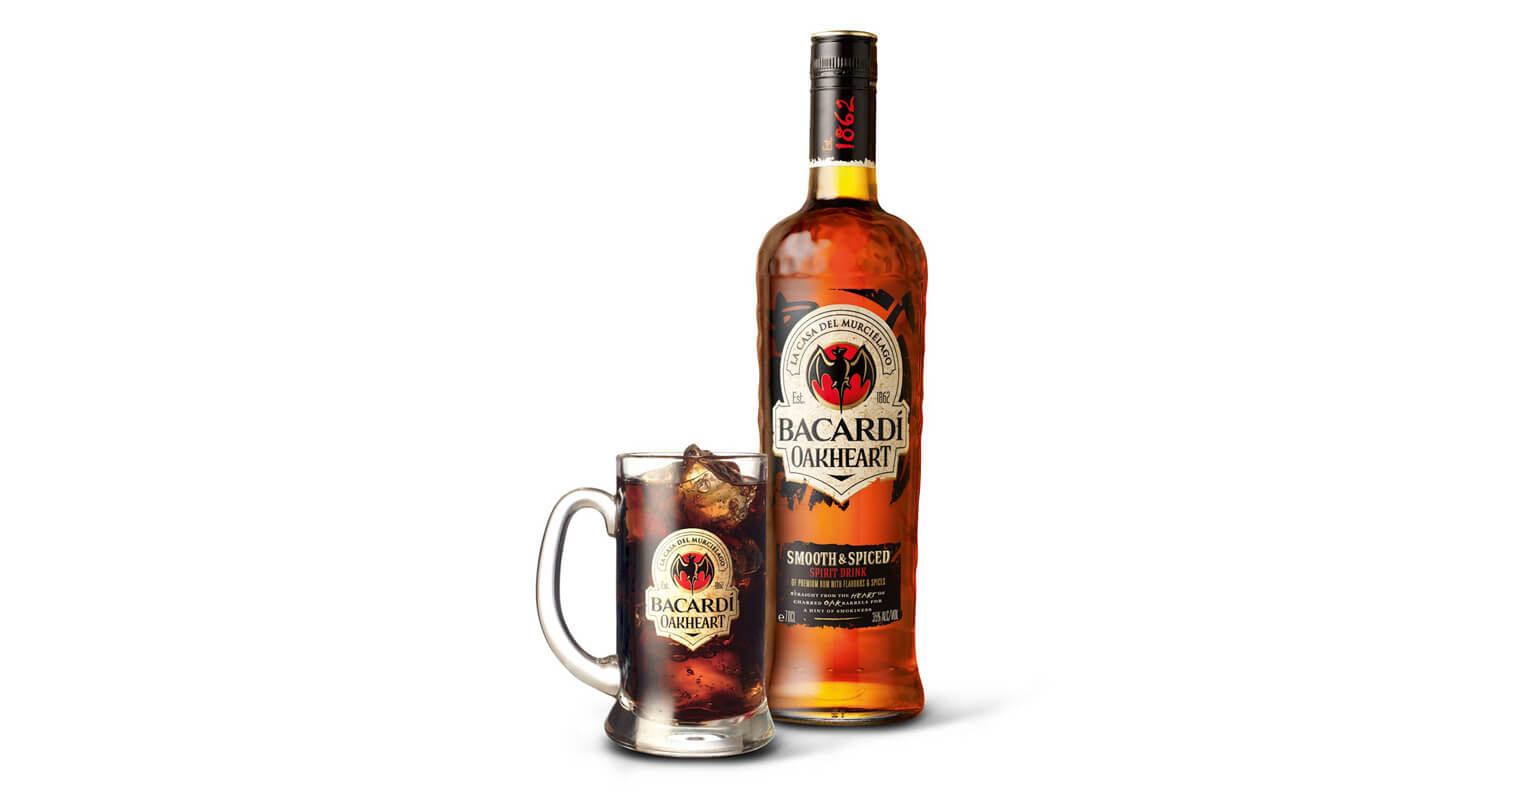 BACARDÍ Oakheart Wins Best Tasting Spiced Rum Over Captain Morgan Original Spiced Rum